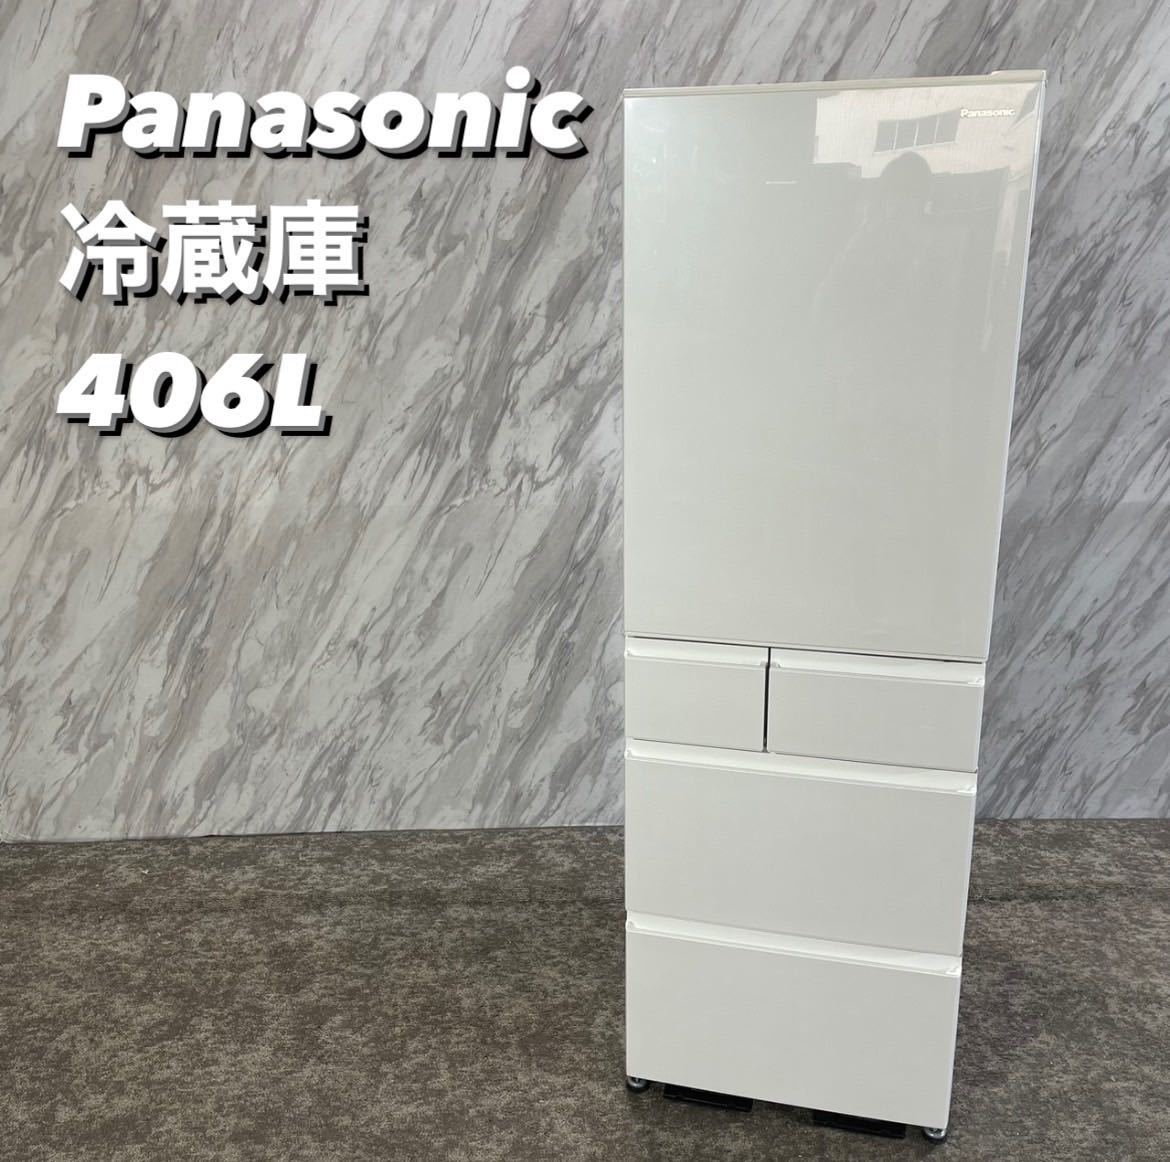 流行 冷蔵庫 Panasonic NR-E417EX Q105 家電 406L 2021年製 400